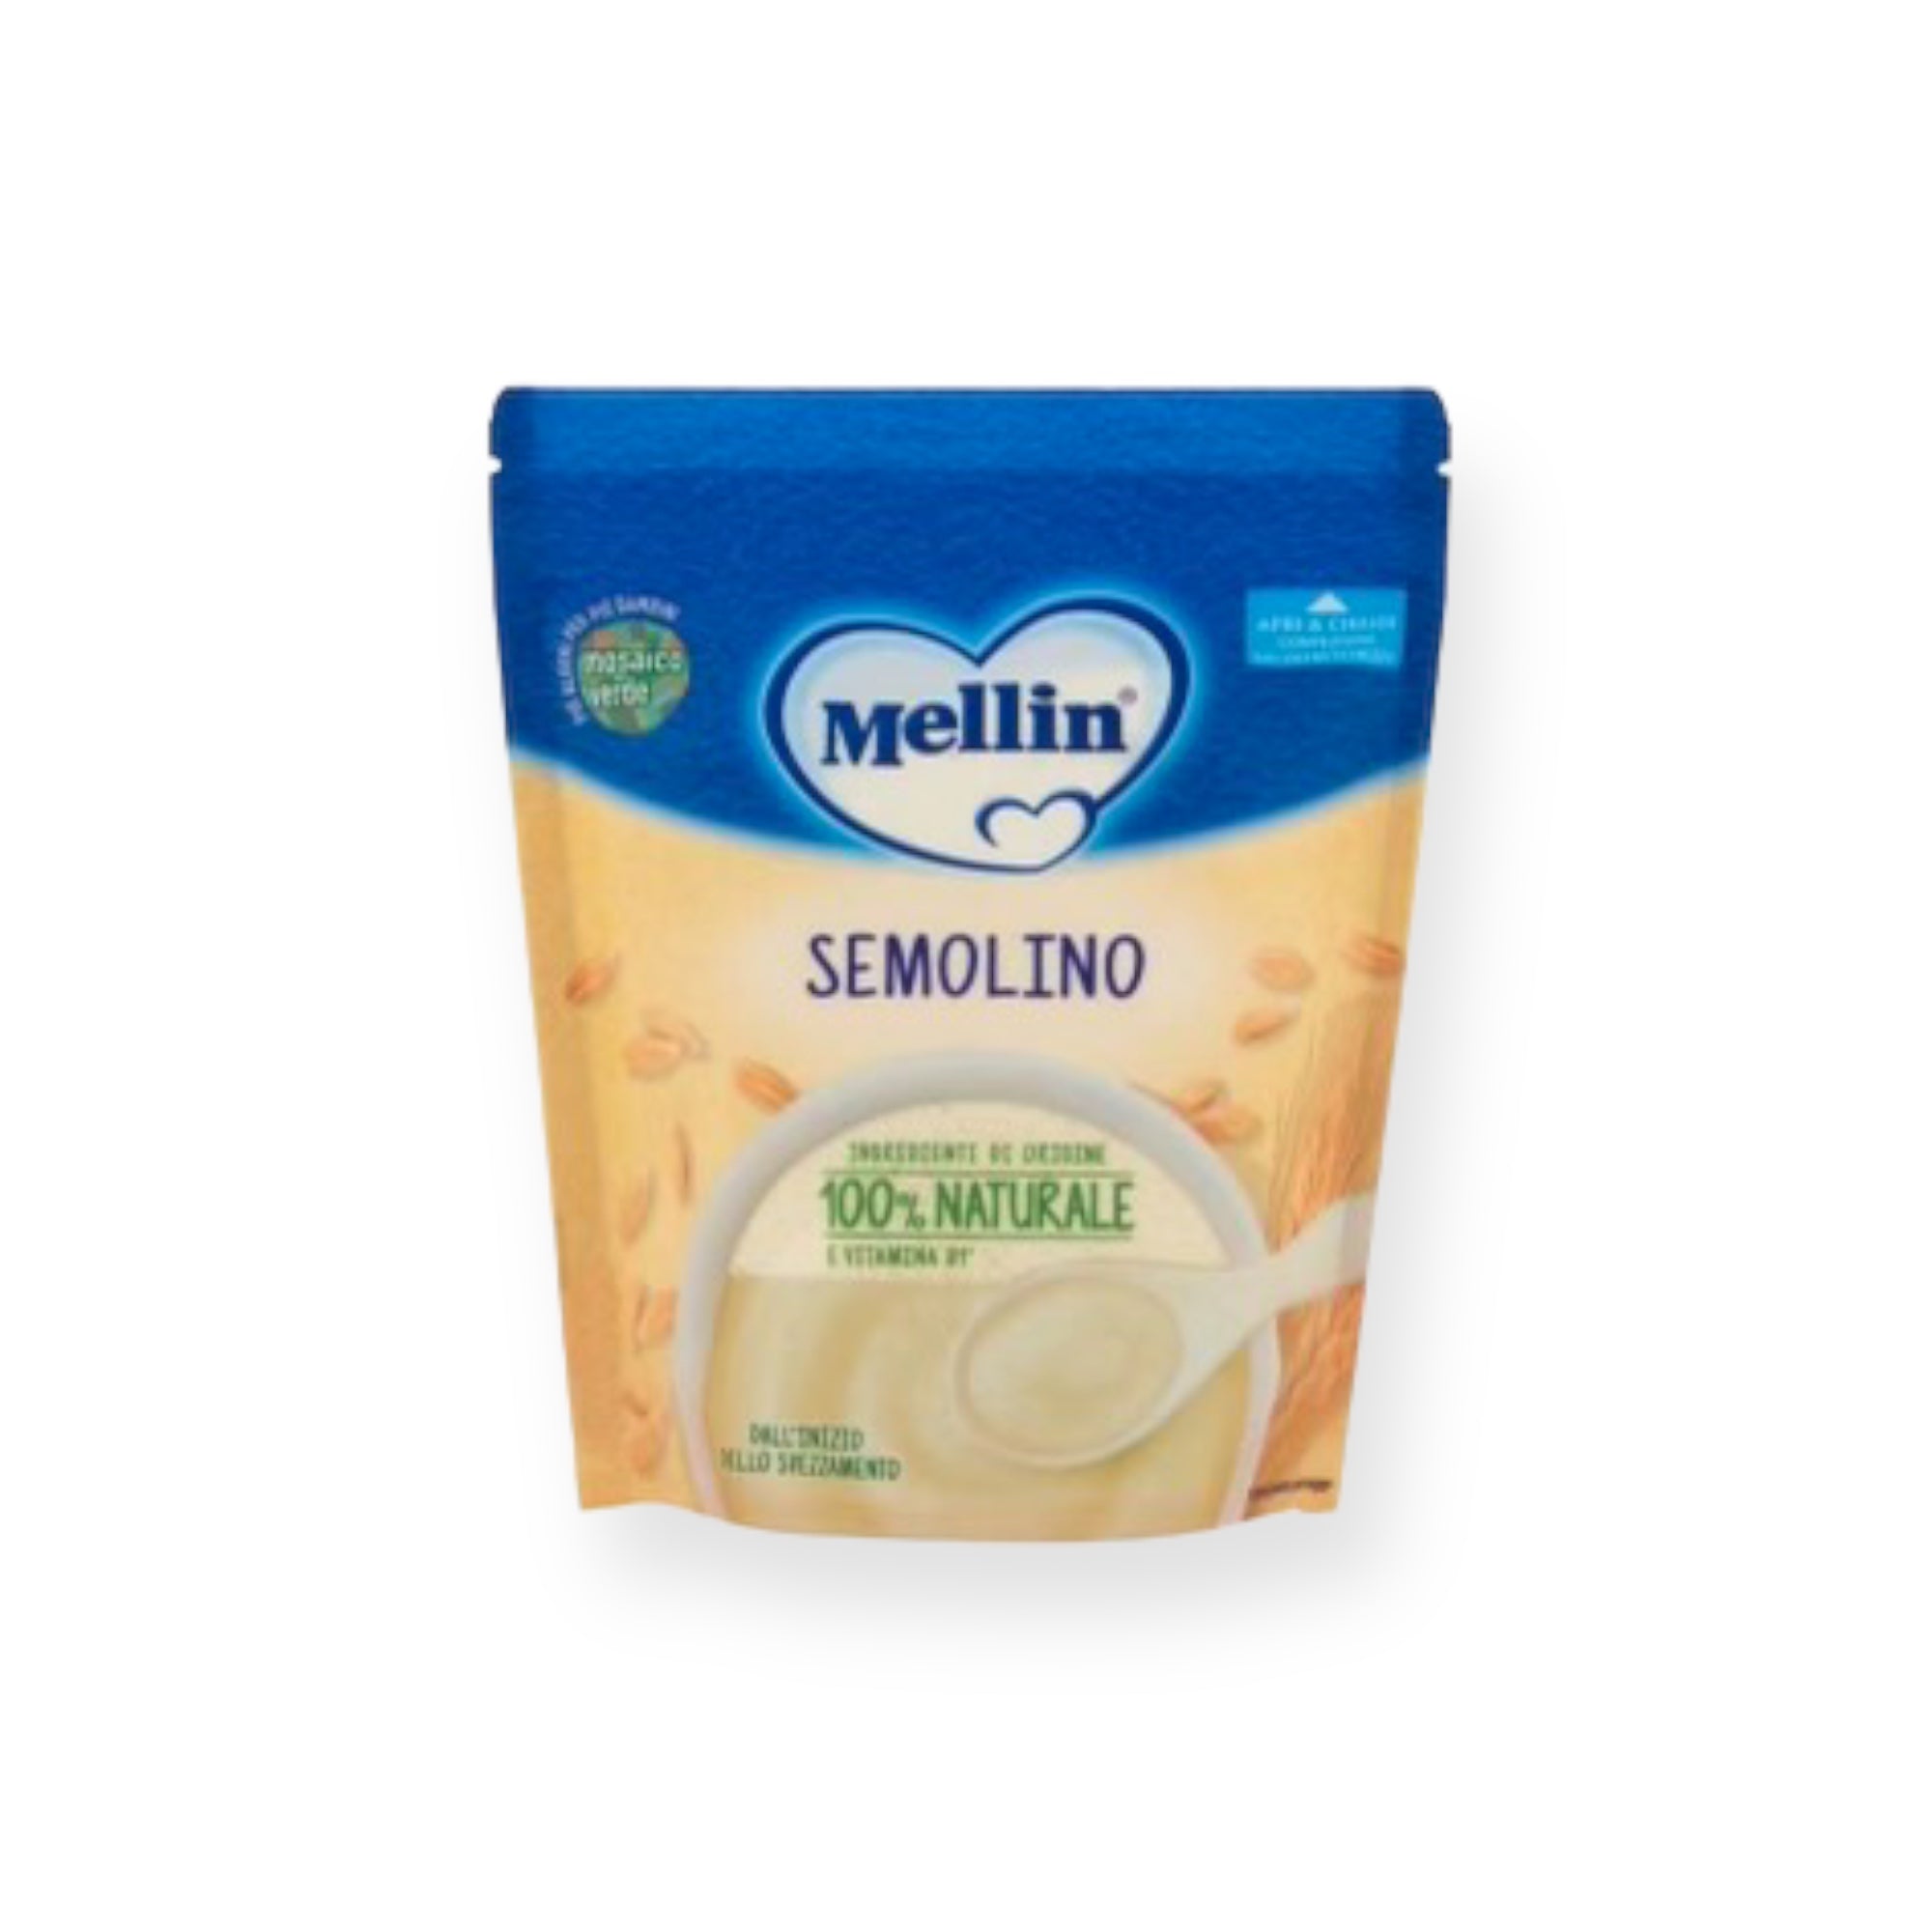 Mellin: Wholesale Milk, Biscotti and Pastina